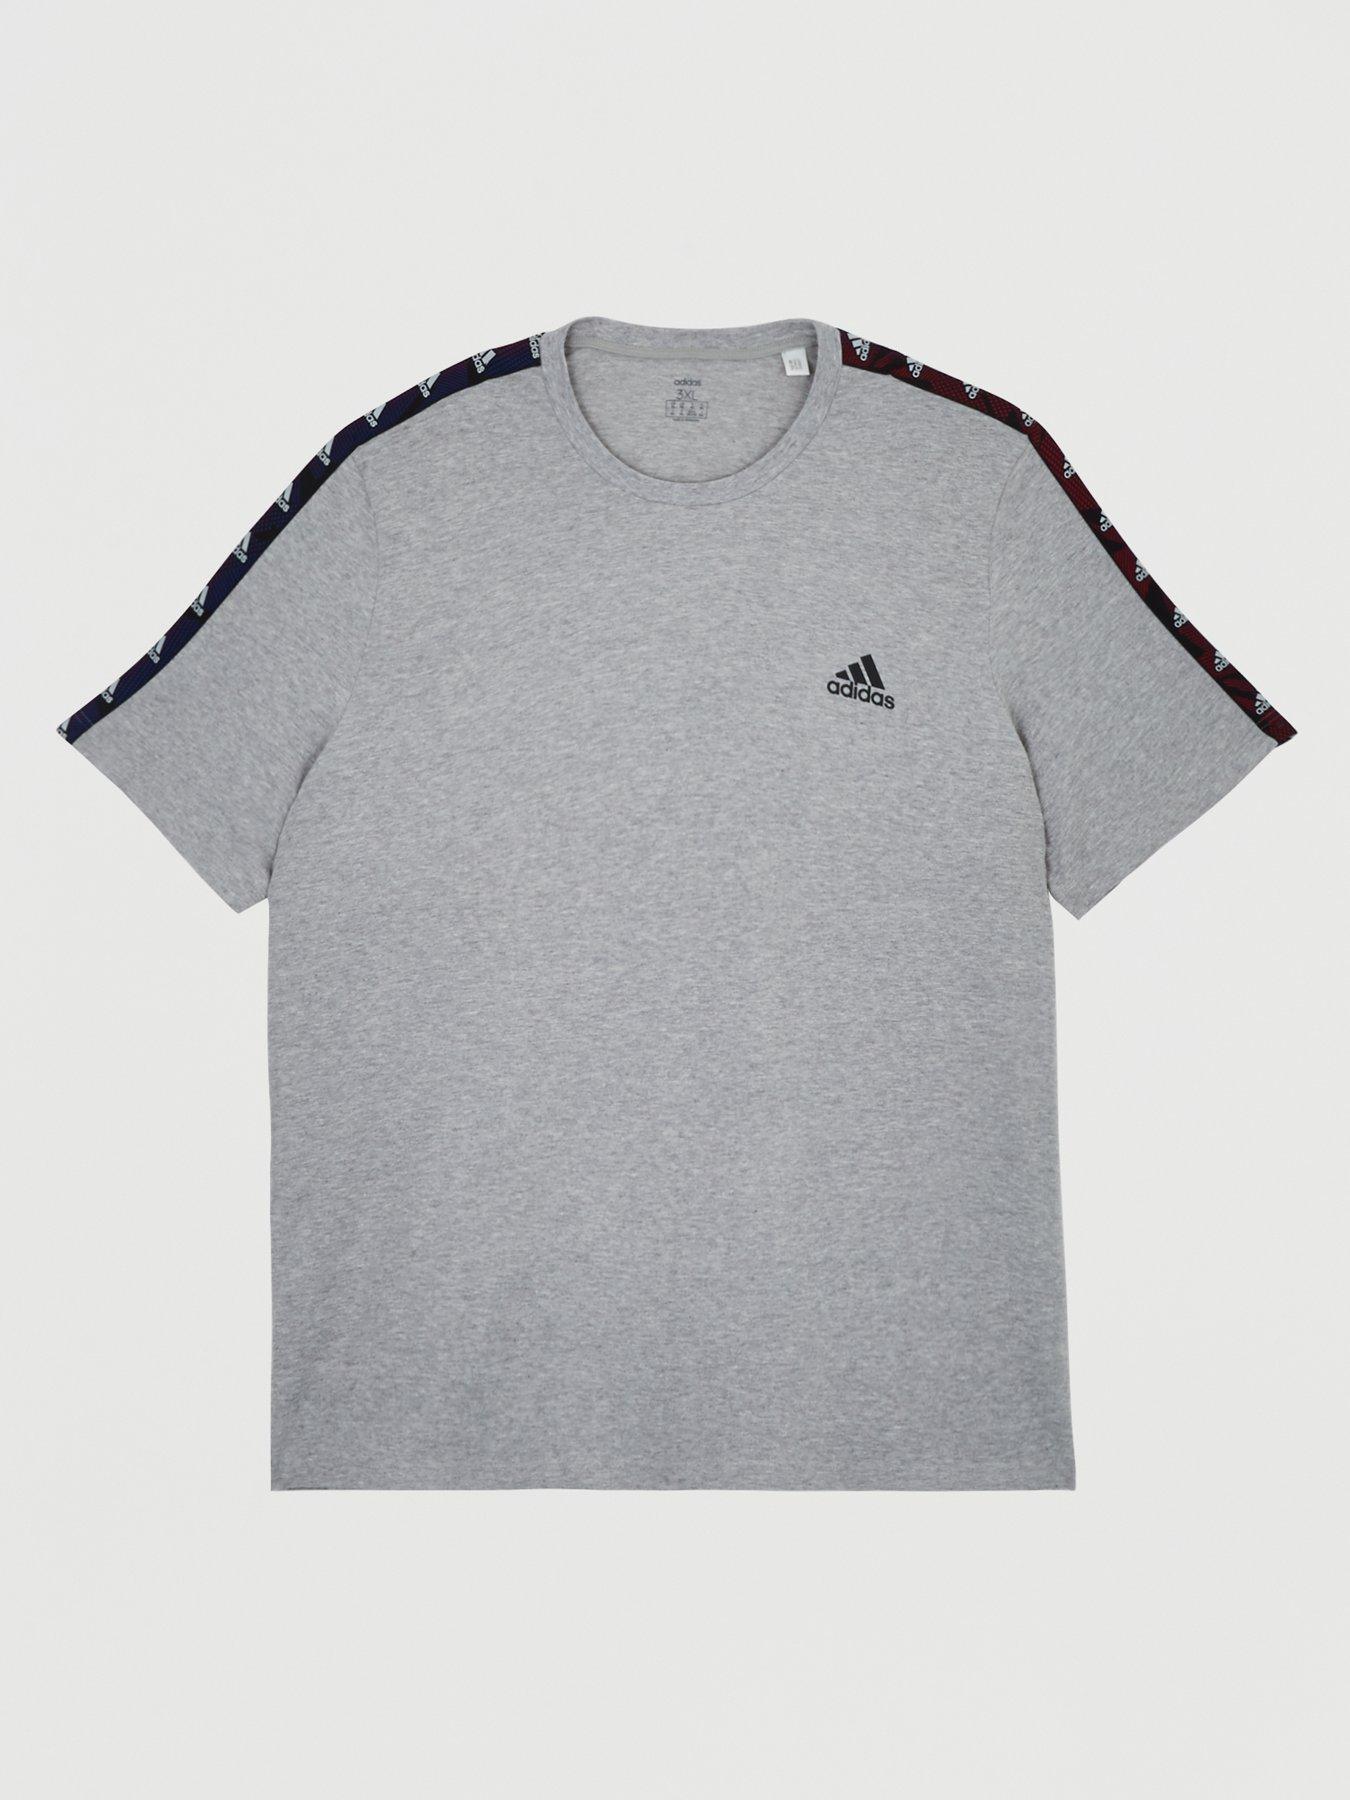 Adidas adidas Plus Size Essential Tape T-Shirt - Grey, 3Xl, Men